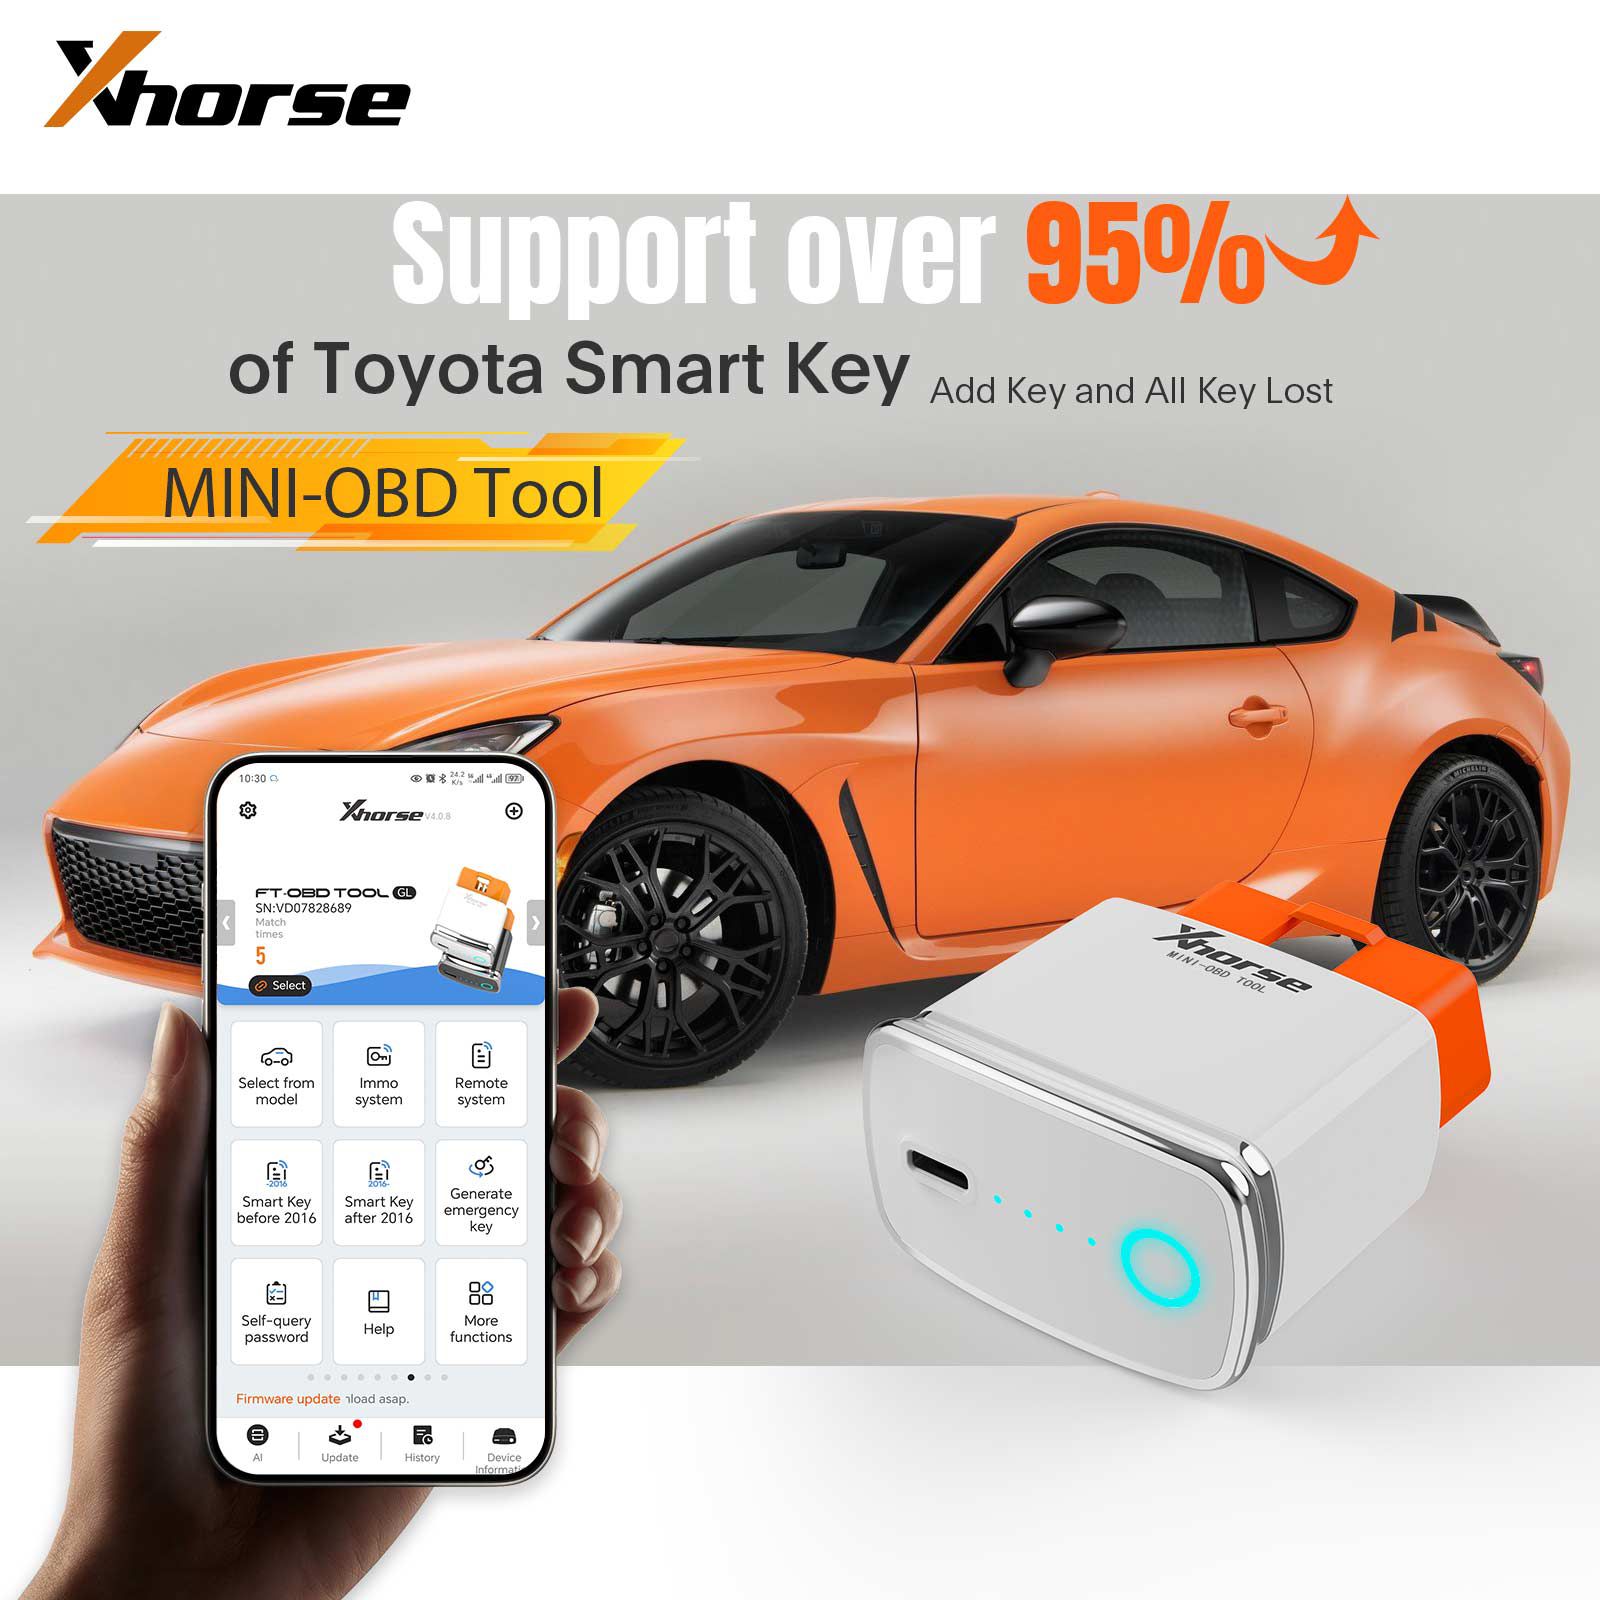 2023 Xhorse MINI OBD Tool FT-OBD for Toyota智能钥匙支持添加钥匙和丢失所有钥匙